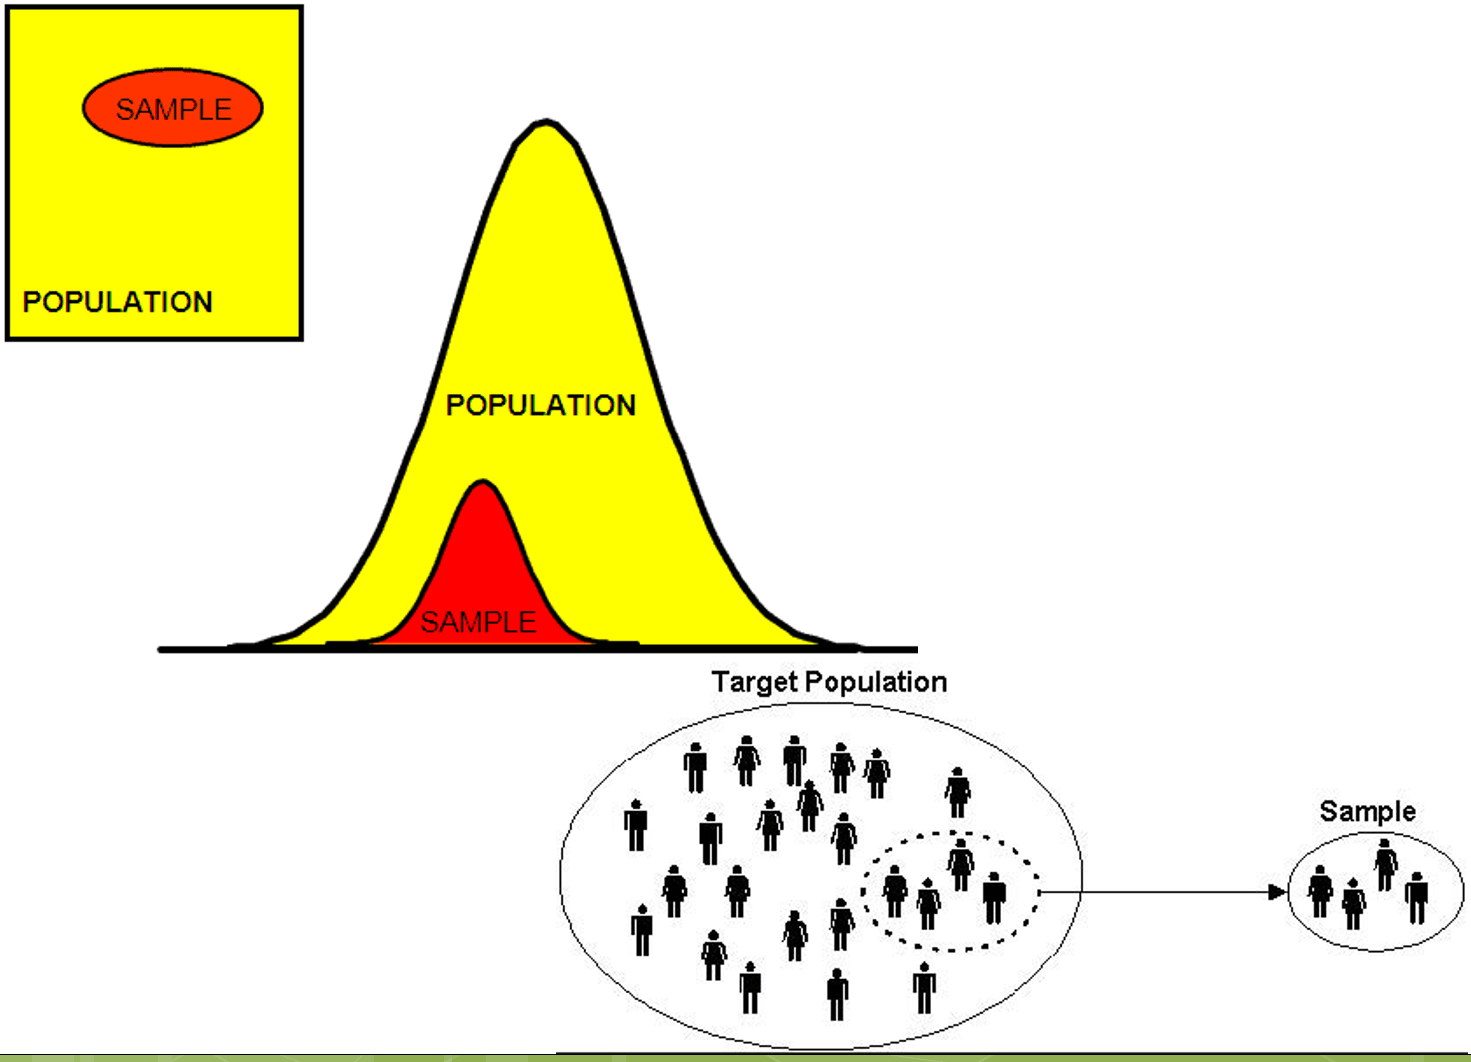 population vs sample